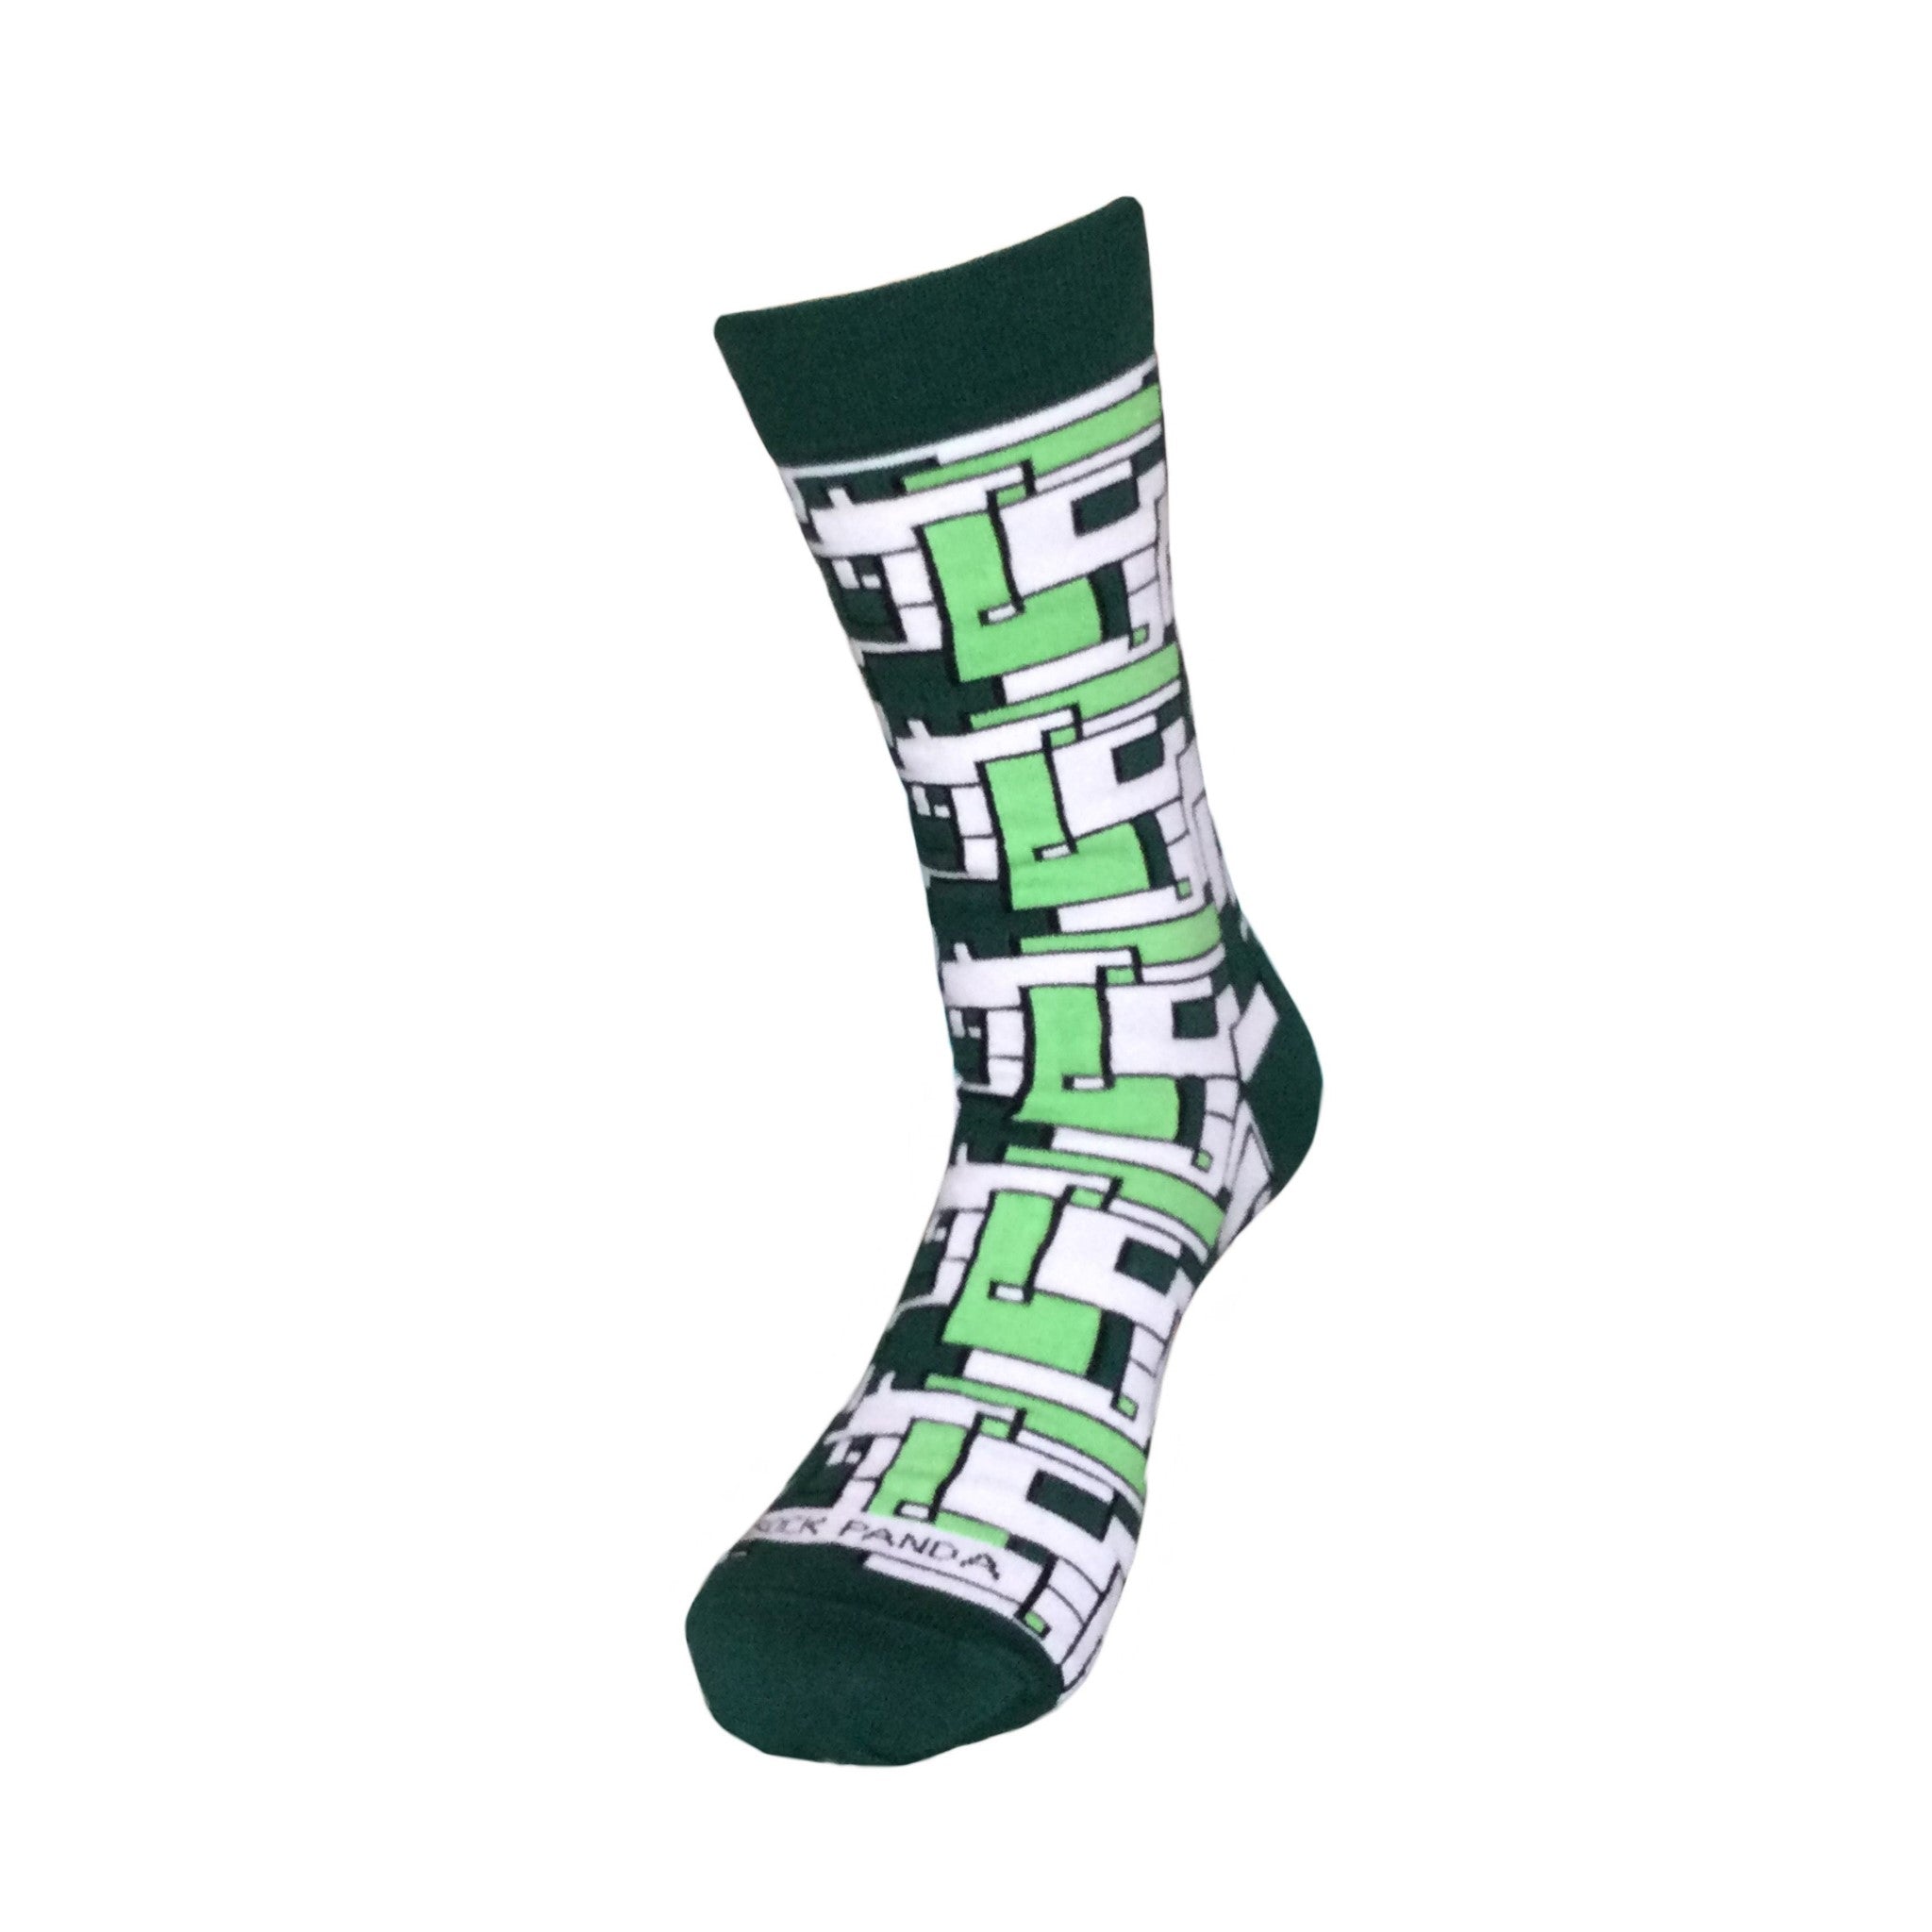 Green Tetris Patterned Office Socks from the Sock Panda